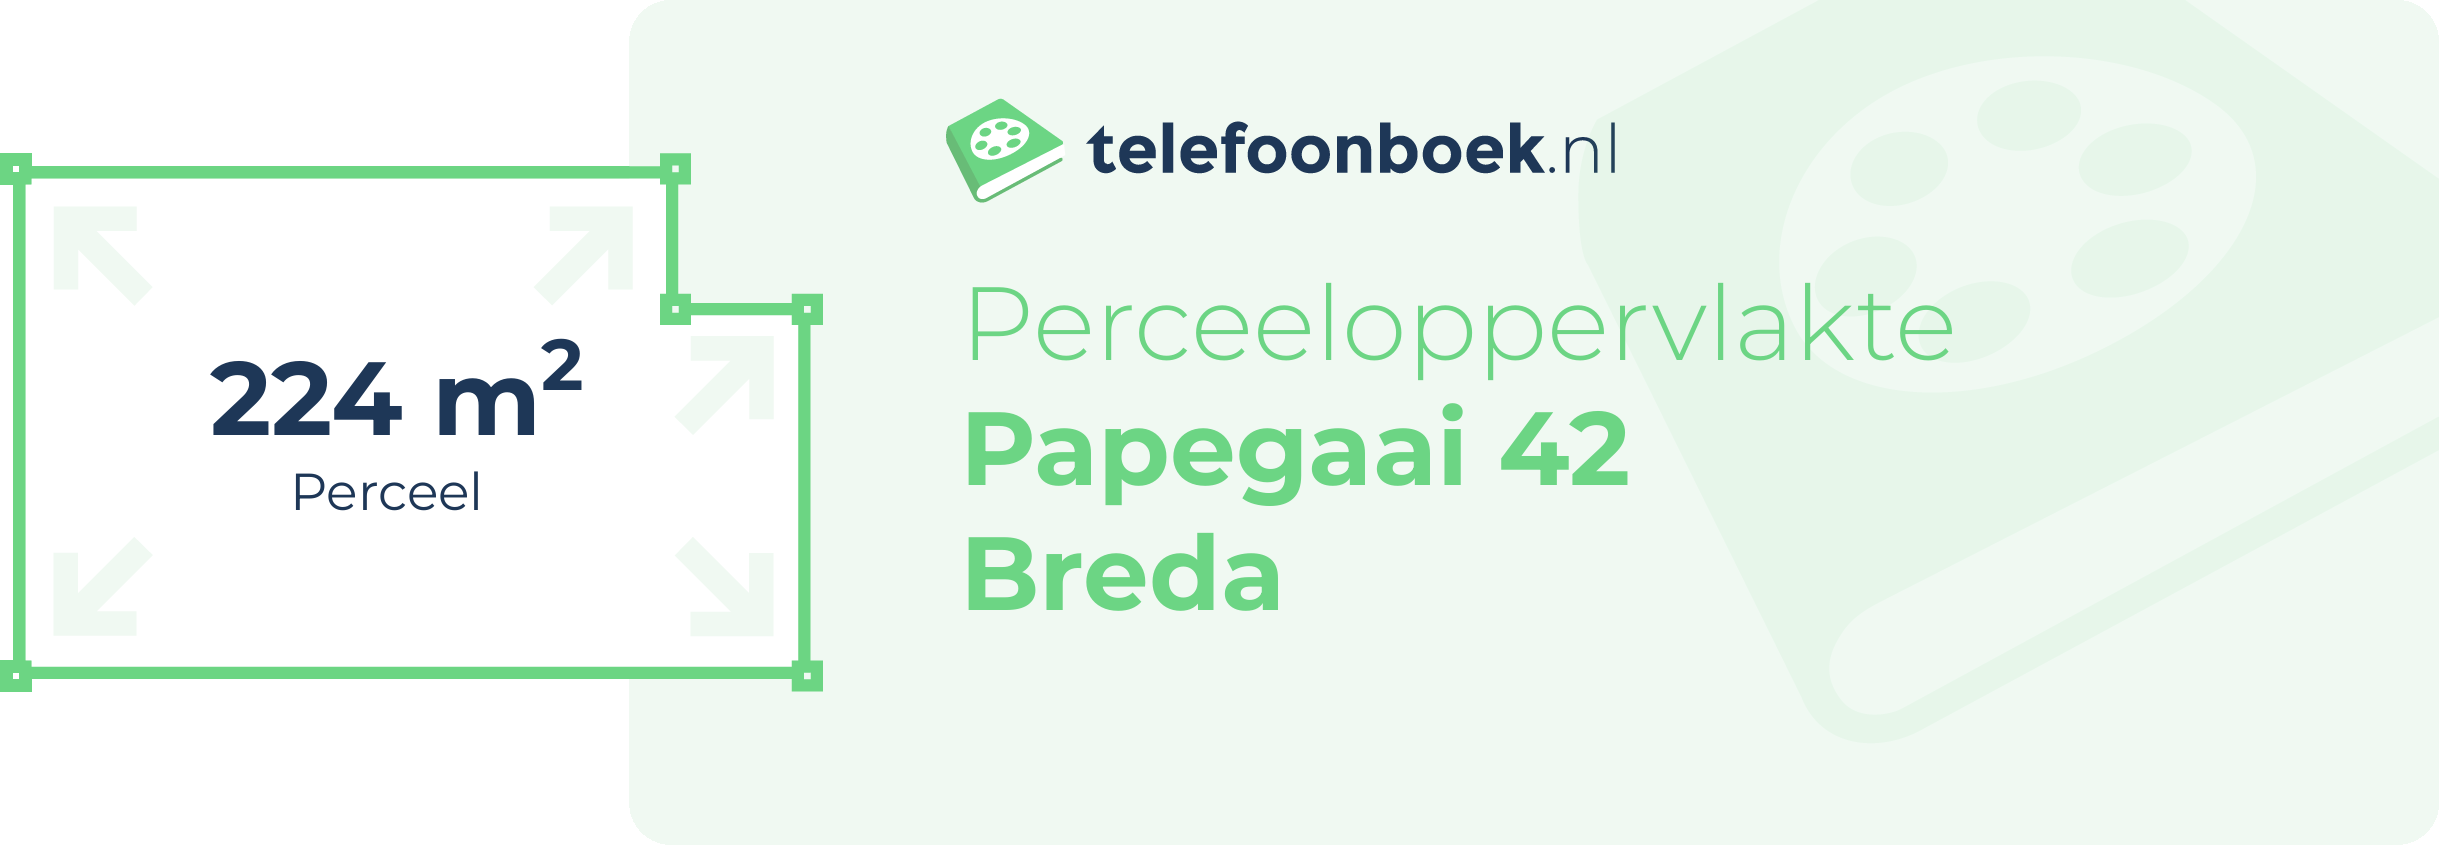 Perceeloppervlakte Papegaai 42 Breda